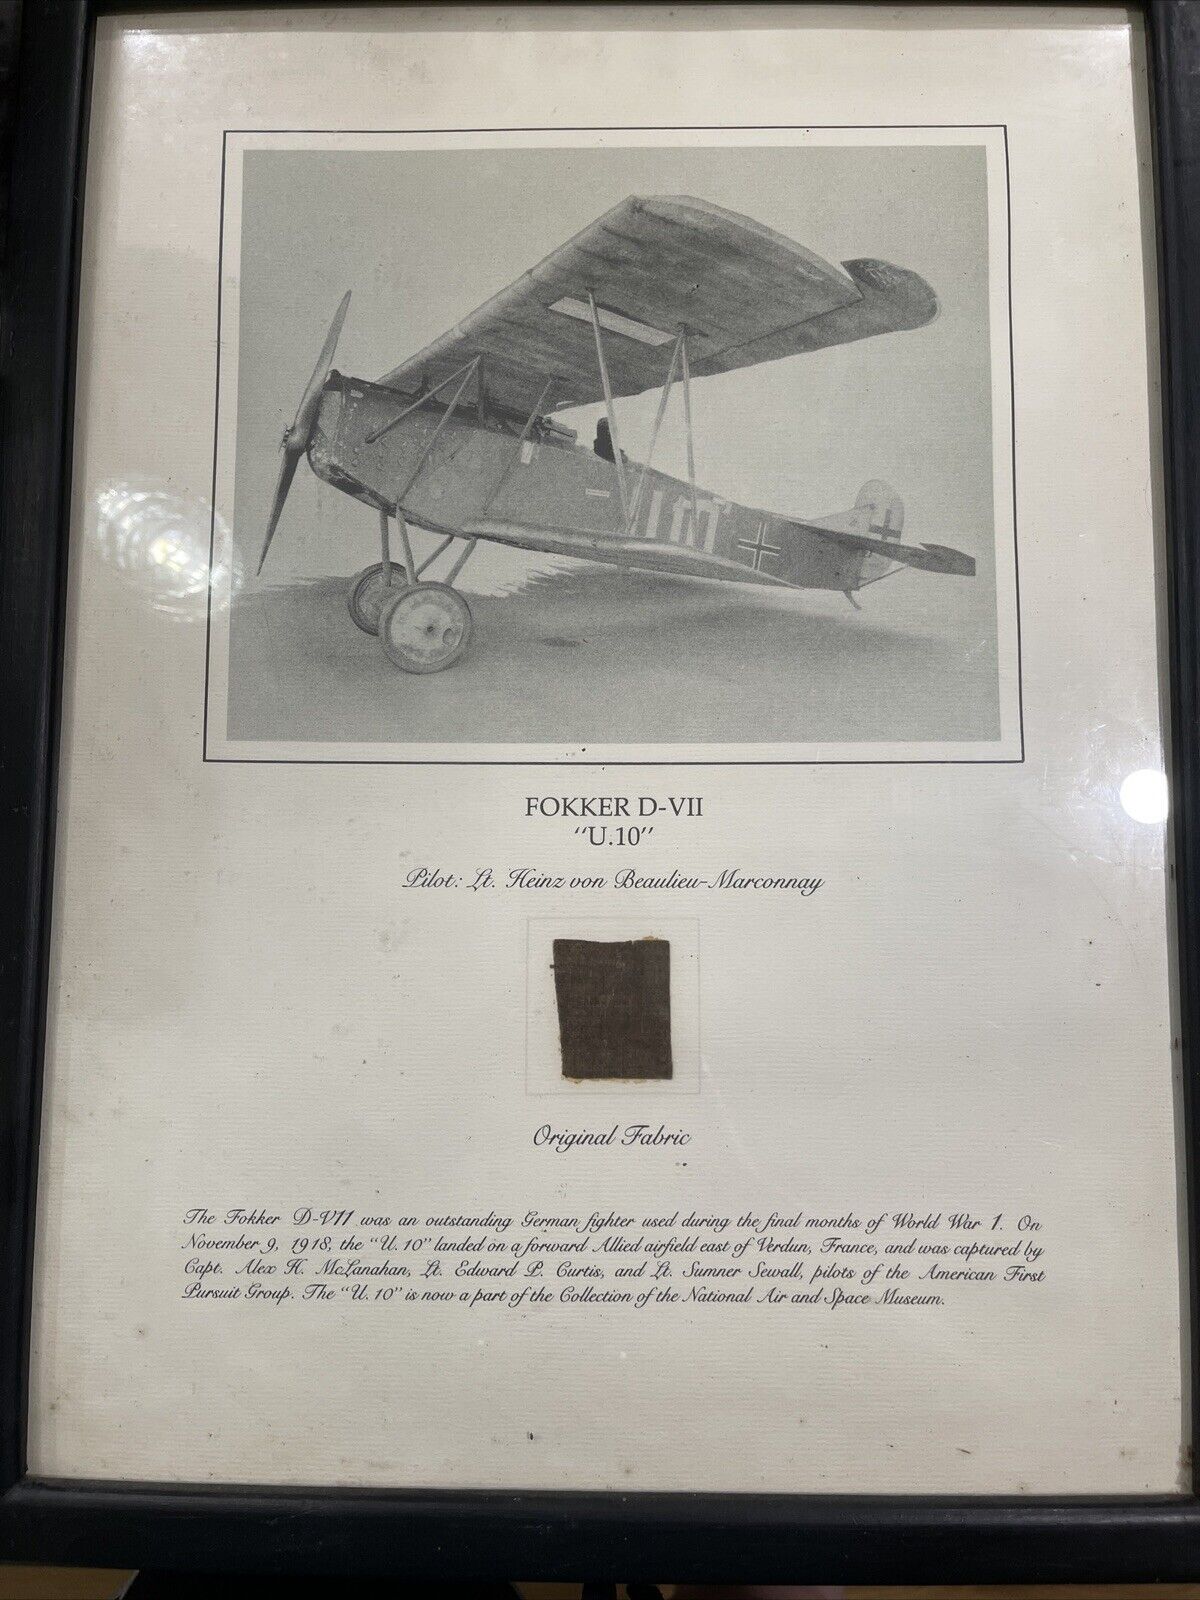 Fokker D-VII “U.10” POSTER AND ORIGINAL FABRIC